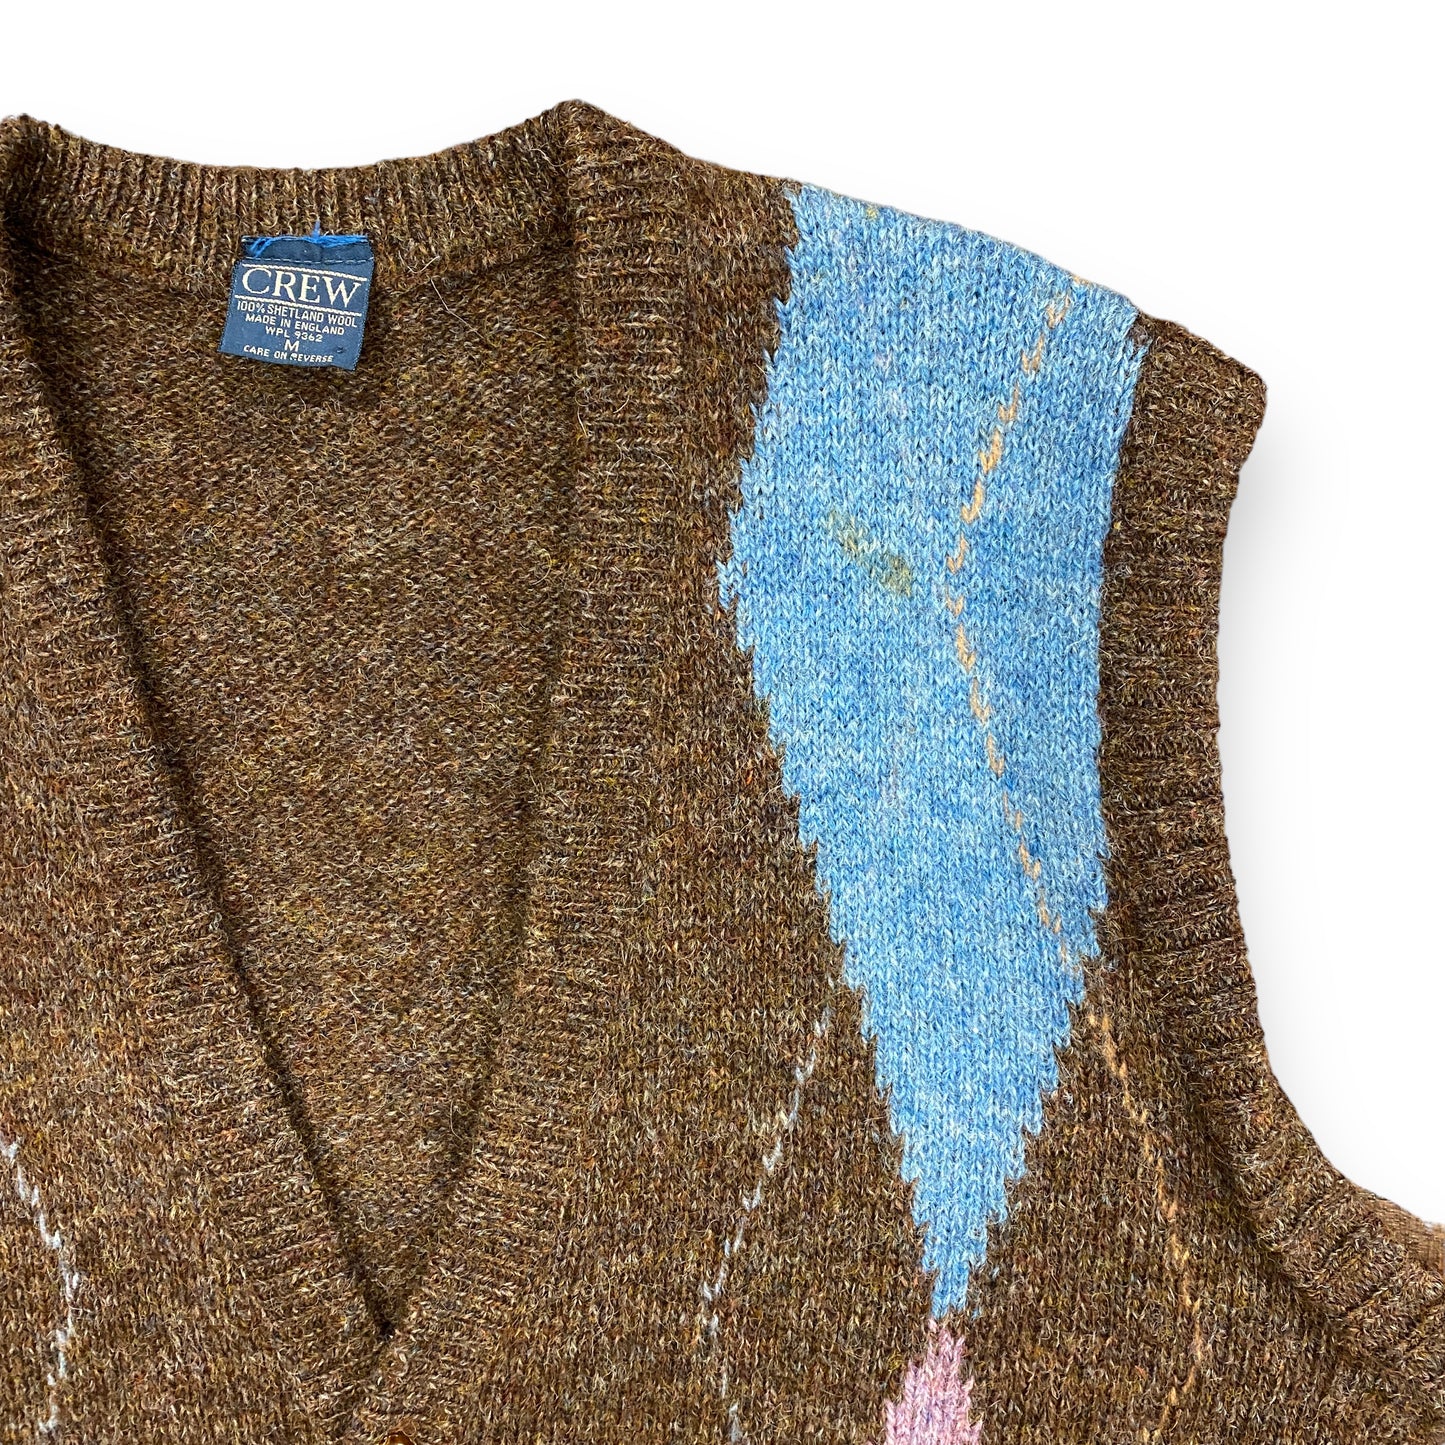 Vintage 1980s Crew Shetland Wool Argyle Sweater Vest - Size Medium